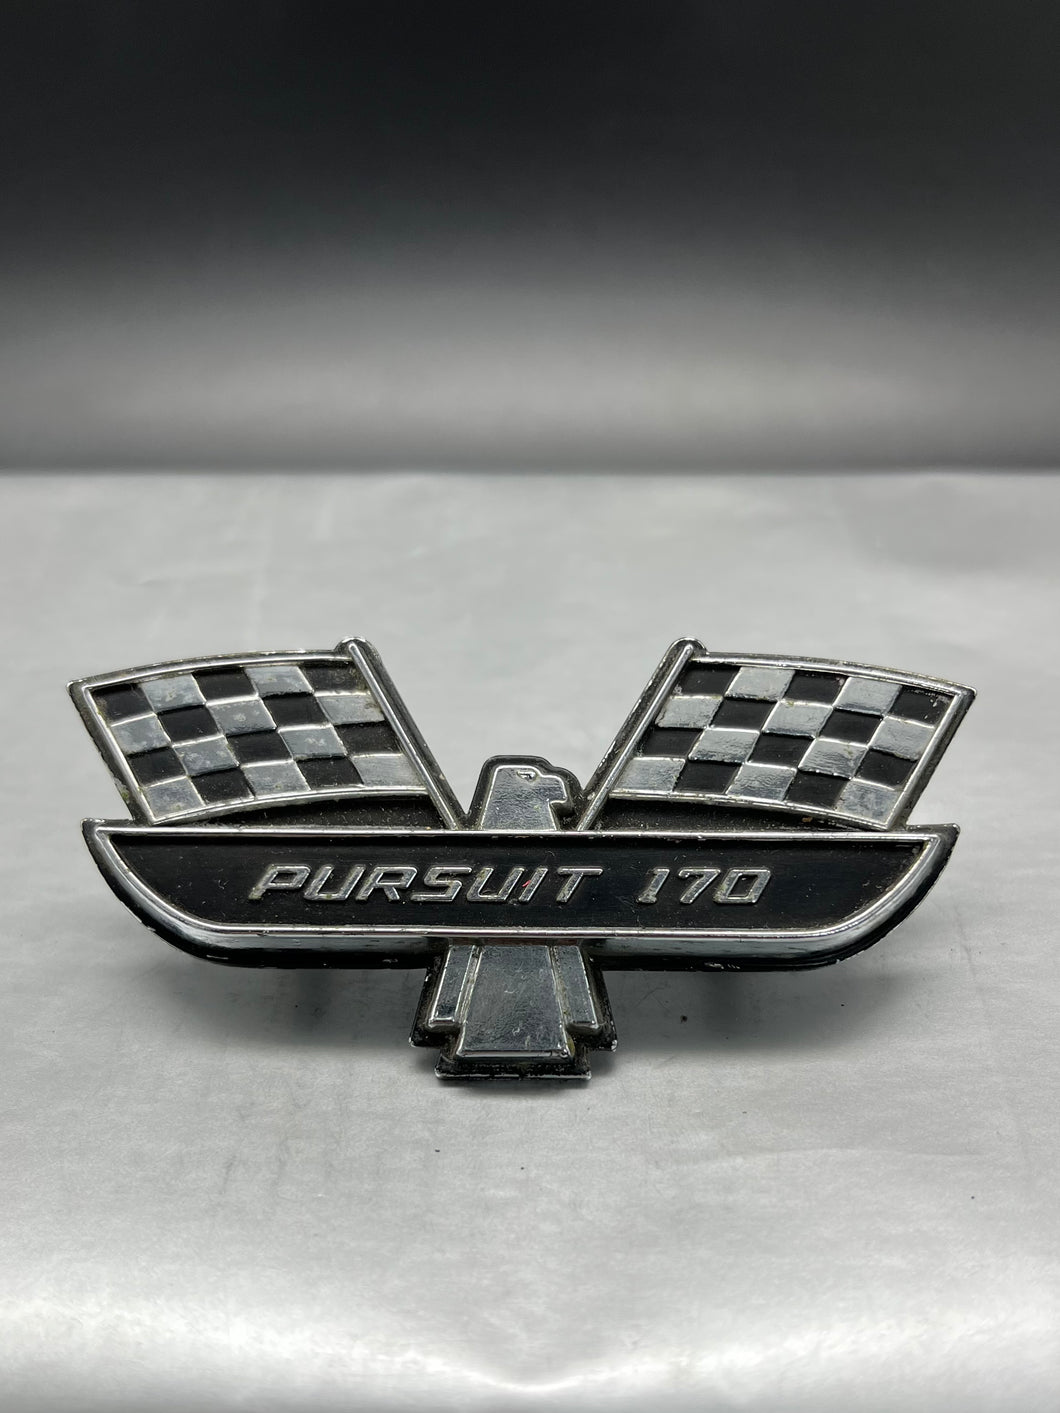 Ford Pursuit 170 Car Badge